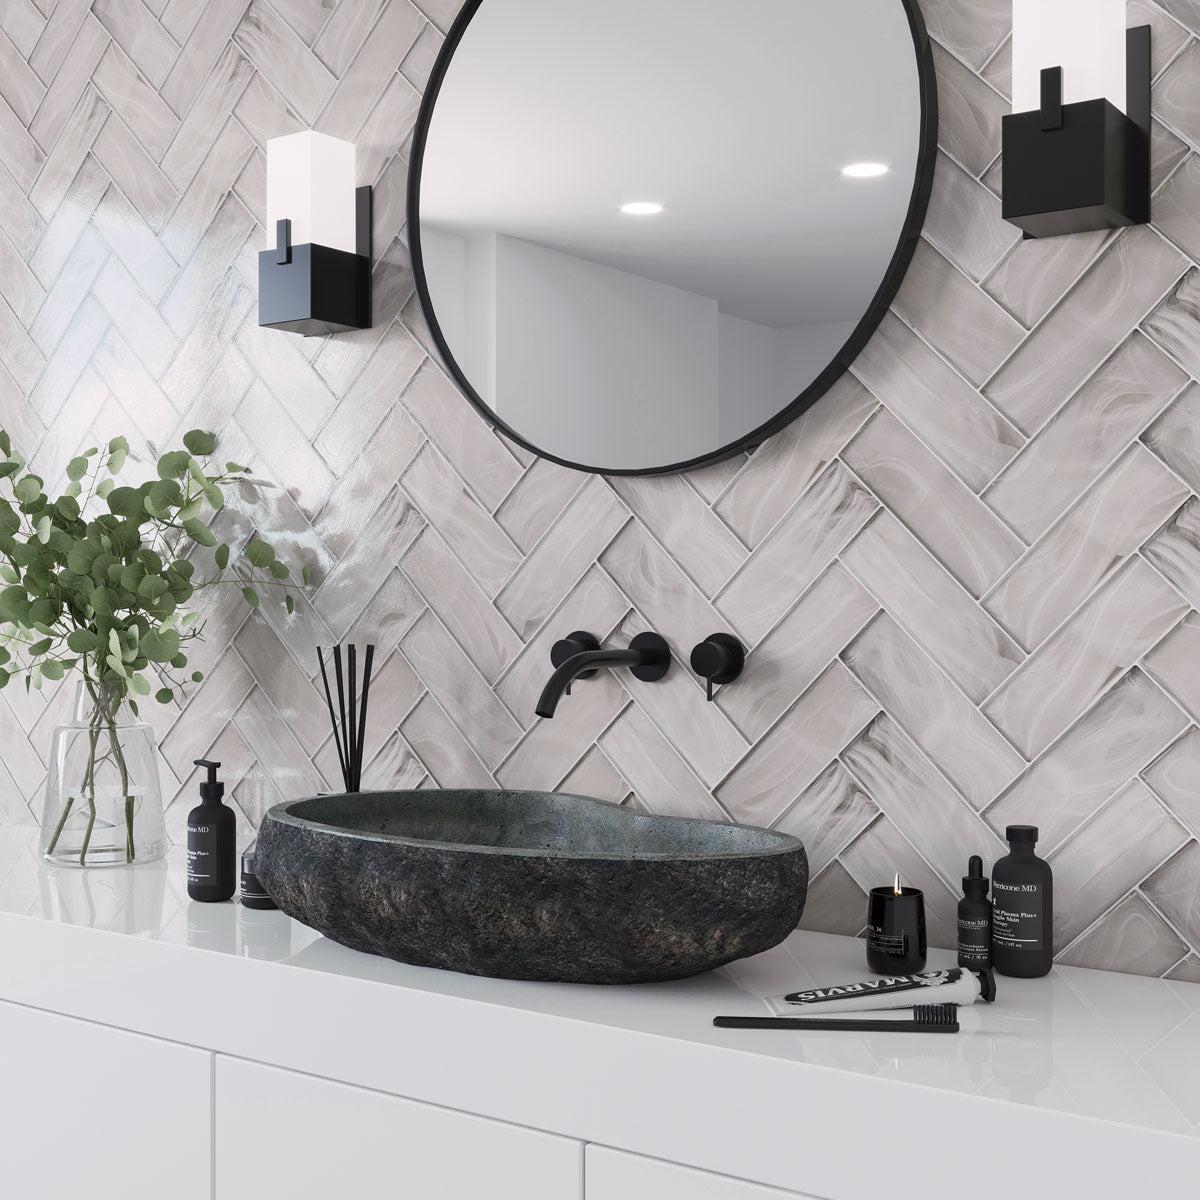 Bathroom vanity backsplash with Sea Glass Platinum subway tiles in a herringbone layout